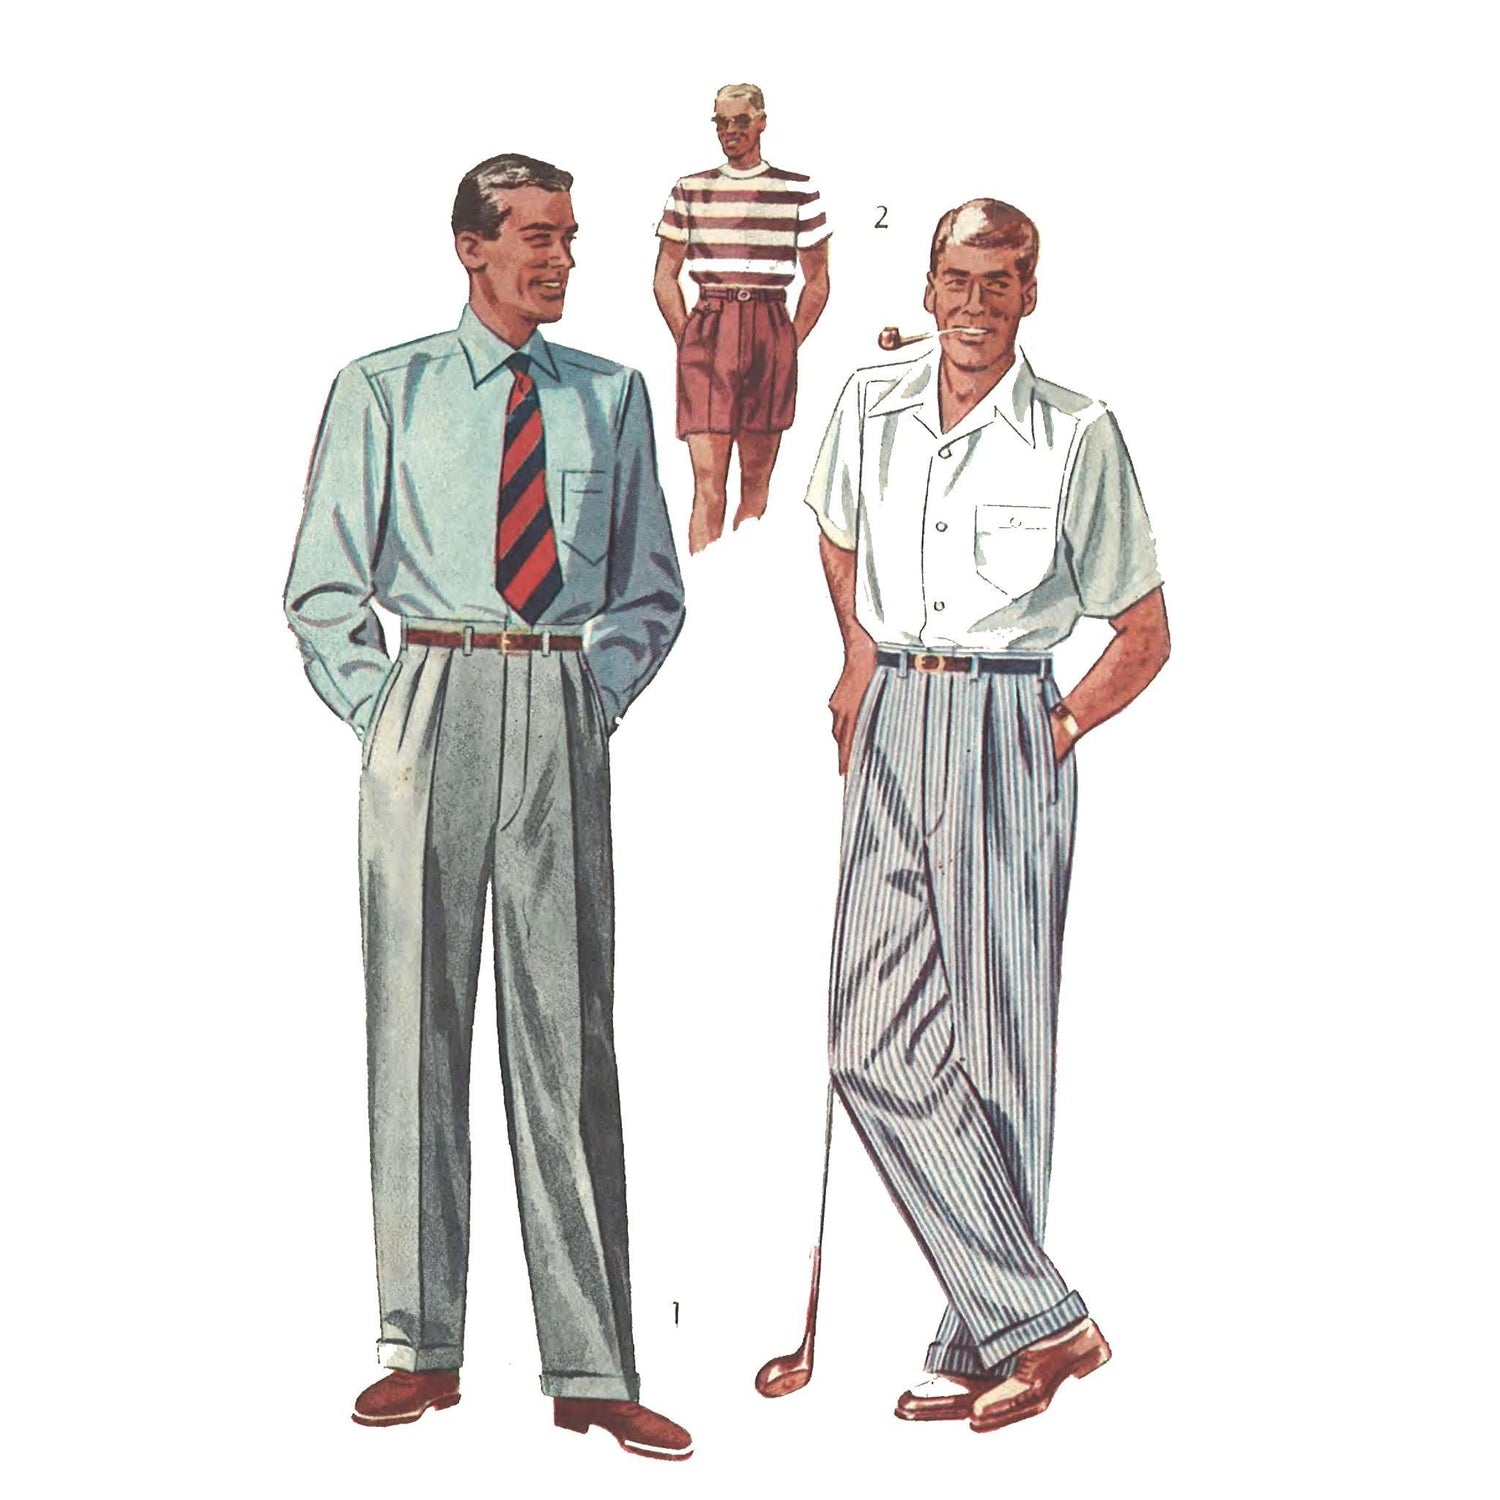 sewing pattern illustration of 3 men wearing slacks and shorts